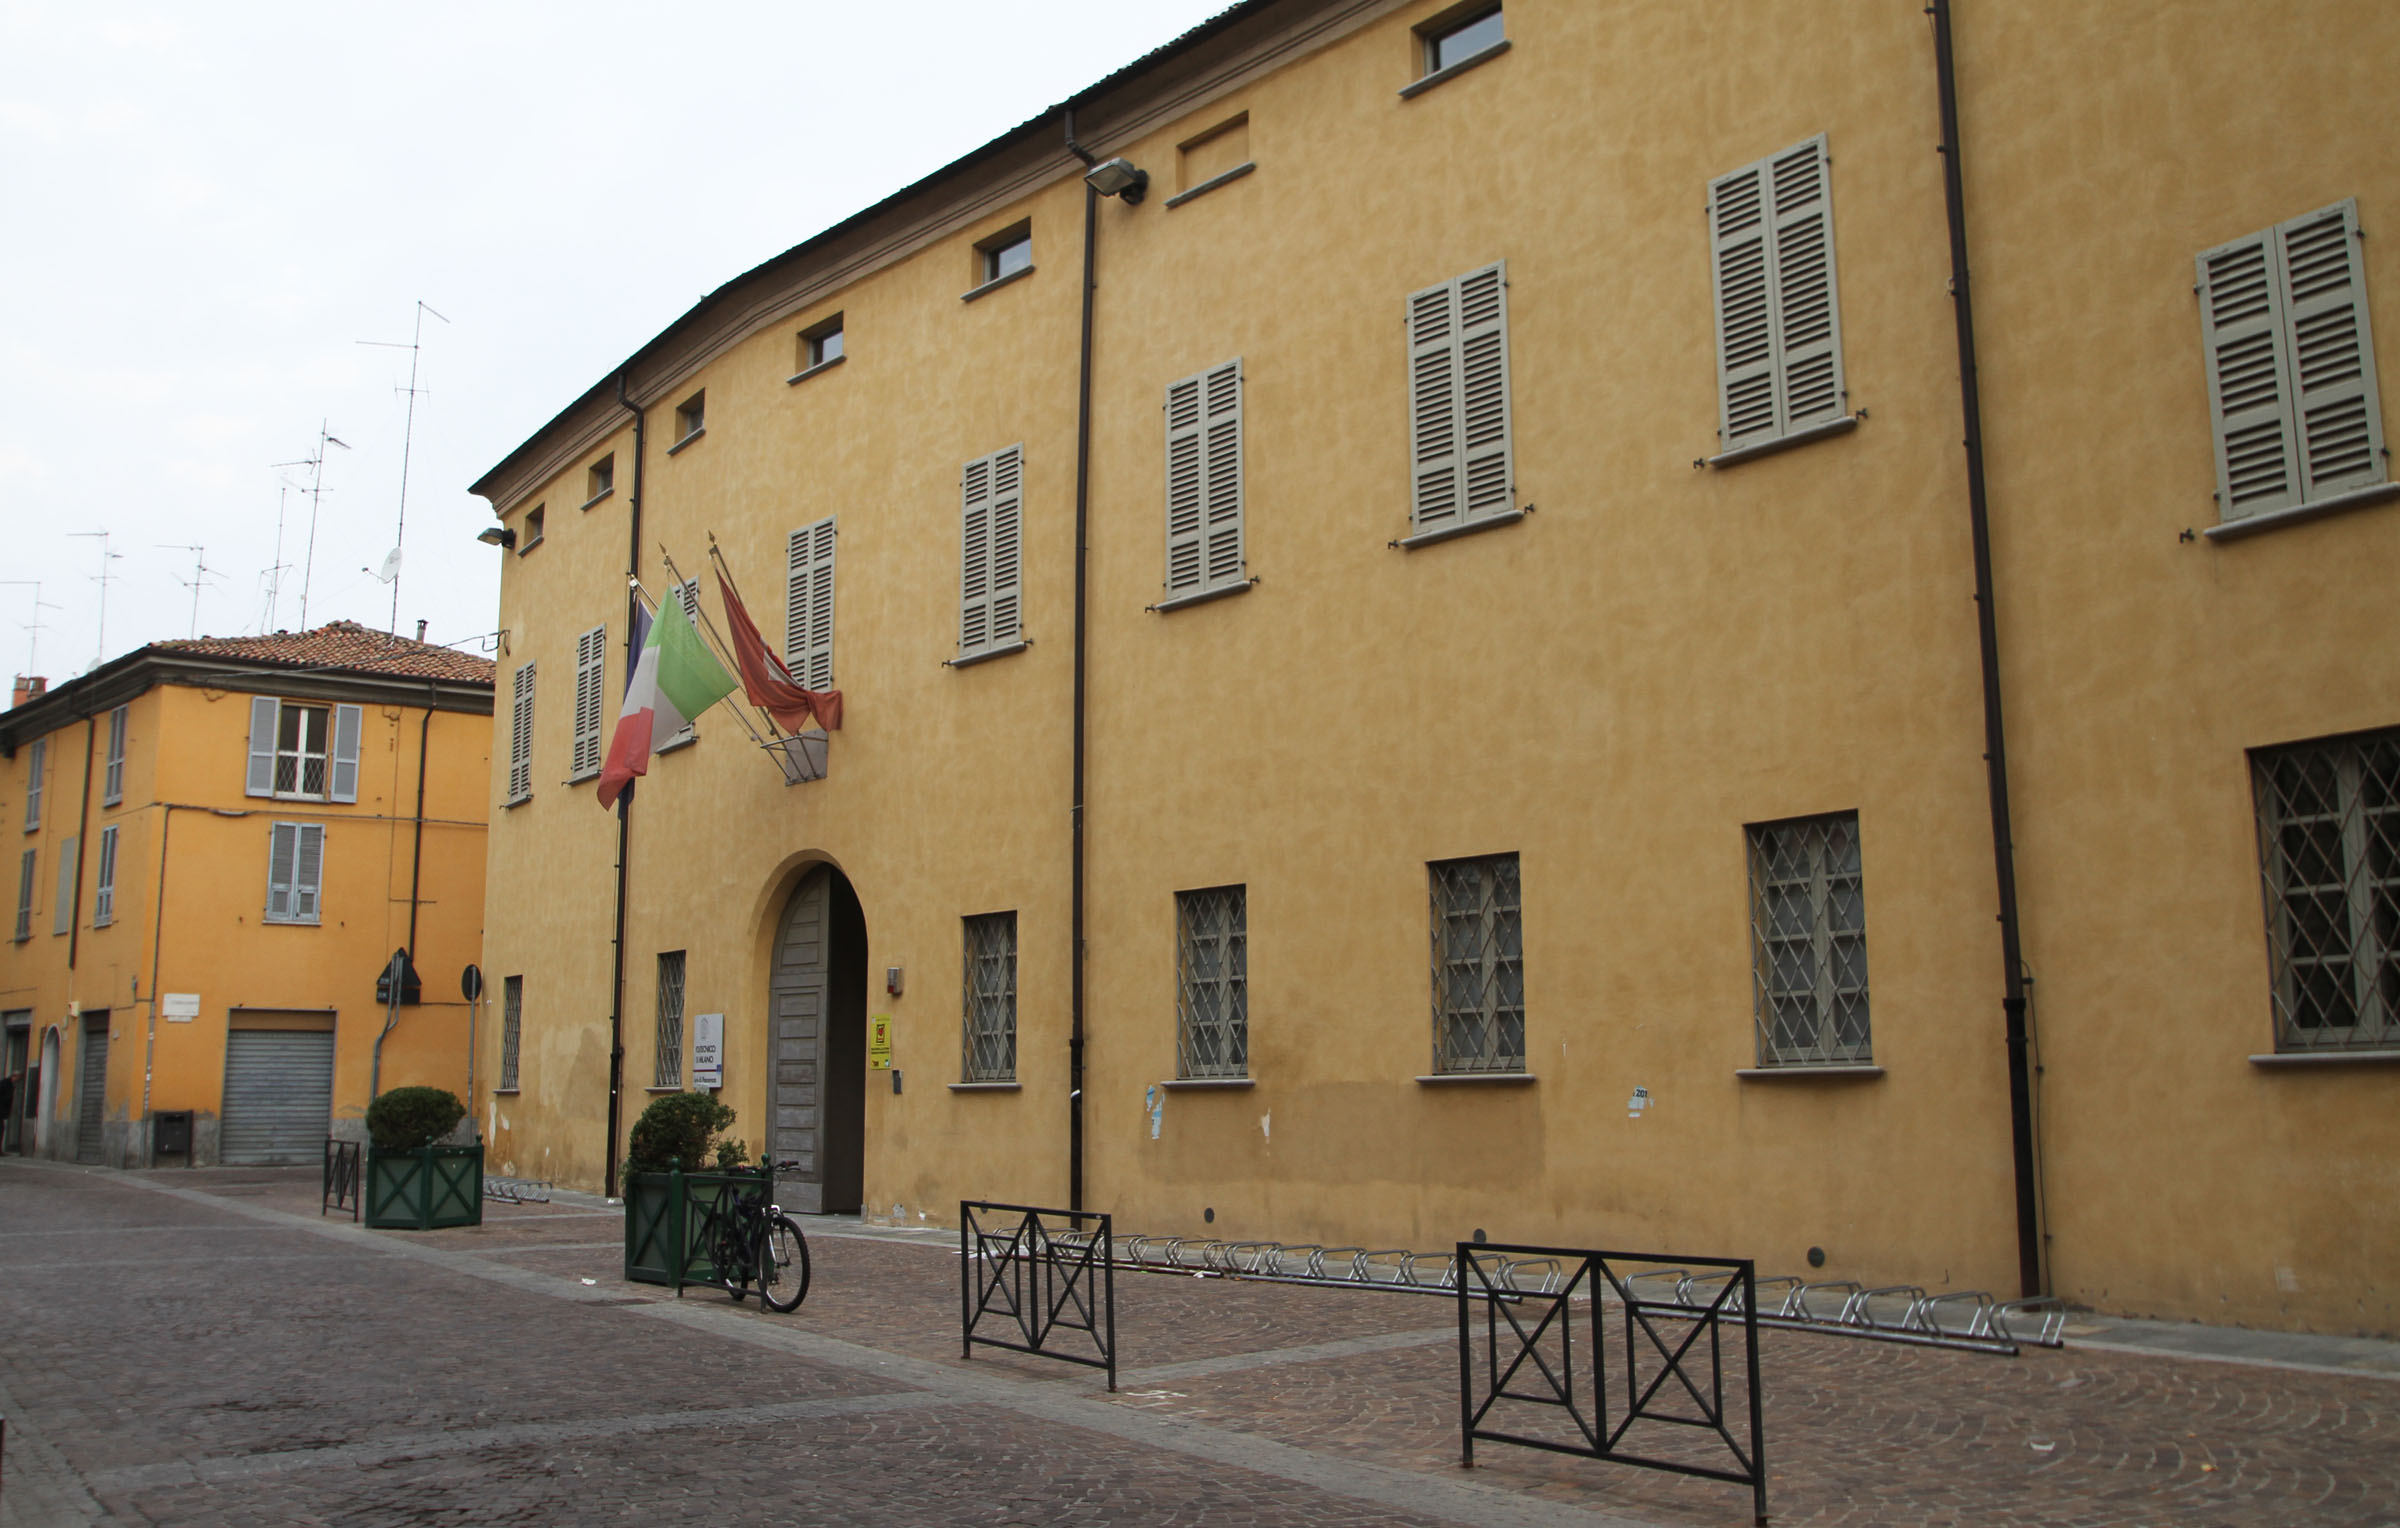 photo: https://upload.wikimedia.org/wikipedia/commons/d/da/001882_caserma_della_neve_%28politecnico%29.JPG